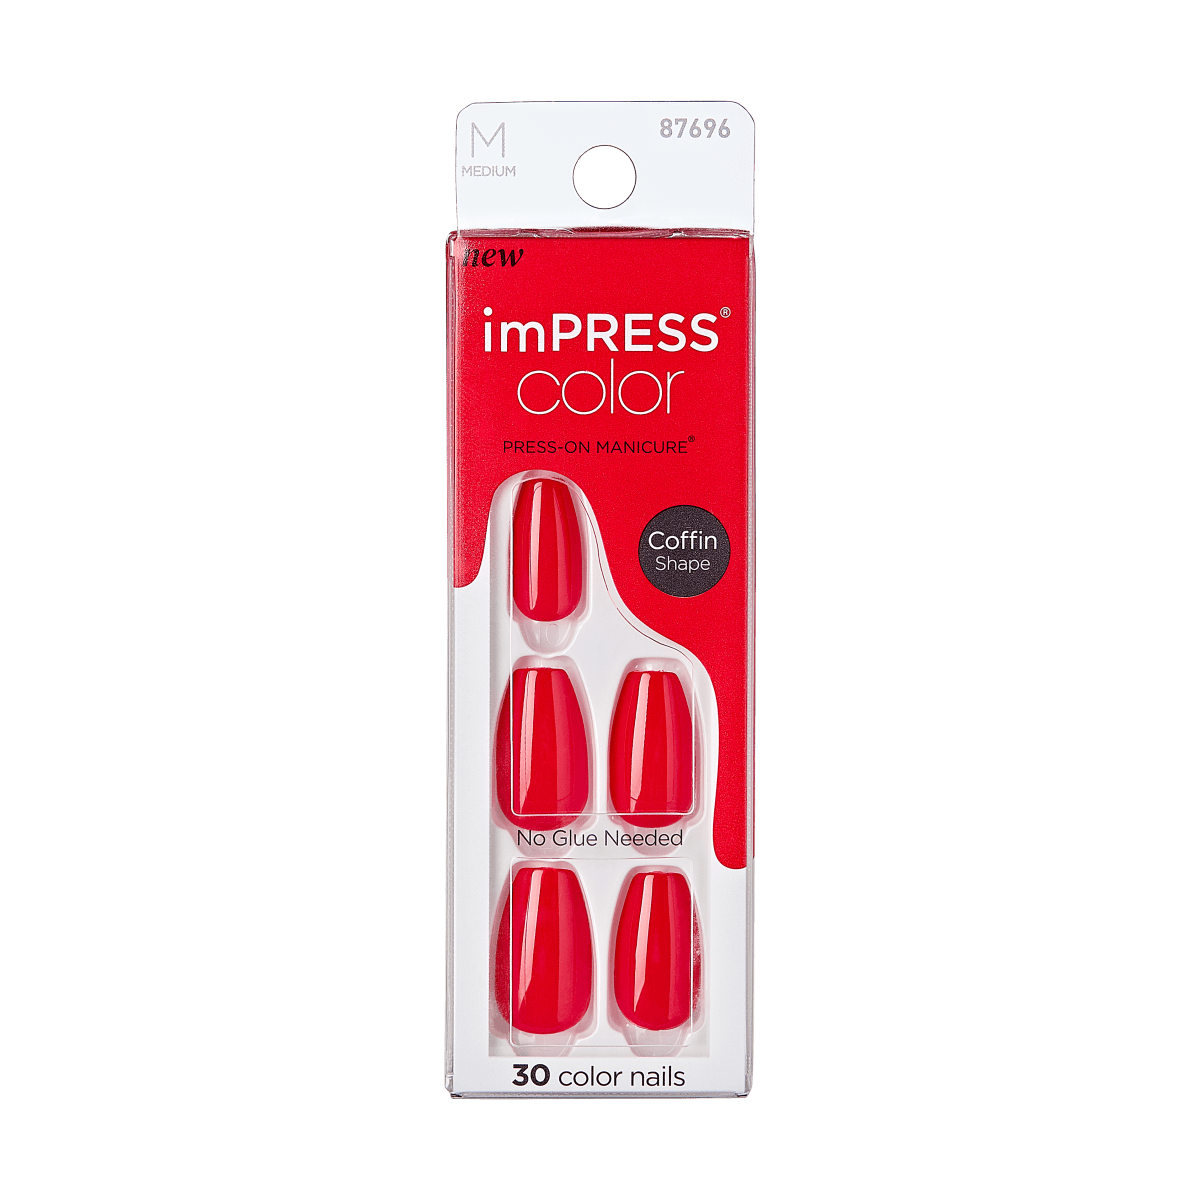 imPRESS Color Press-On Manicure - Beet Snacks